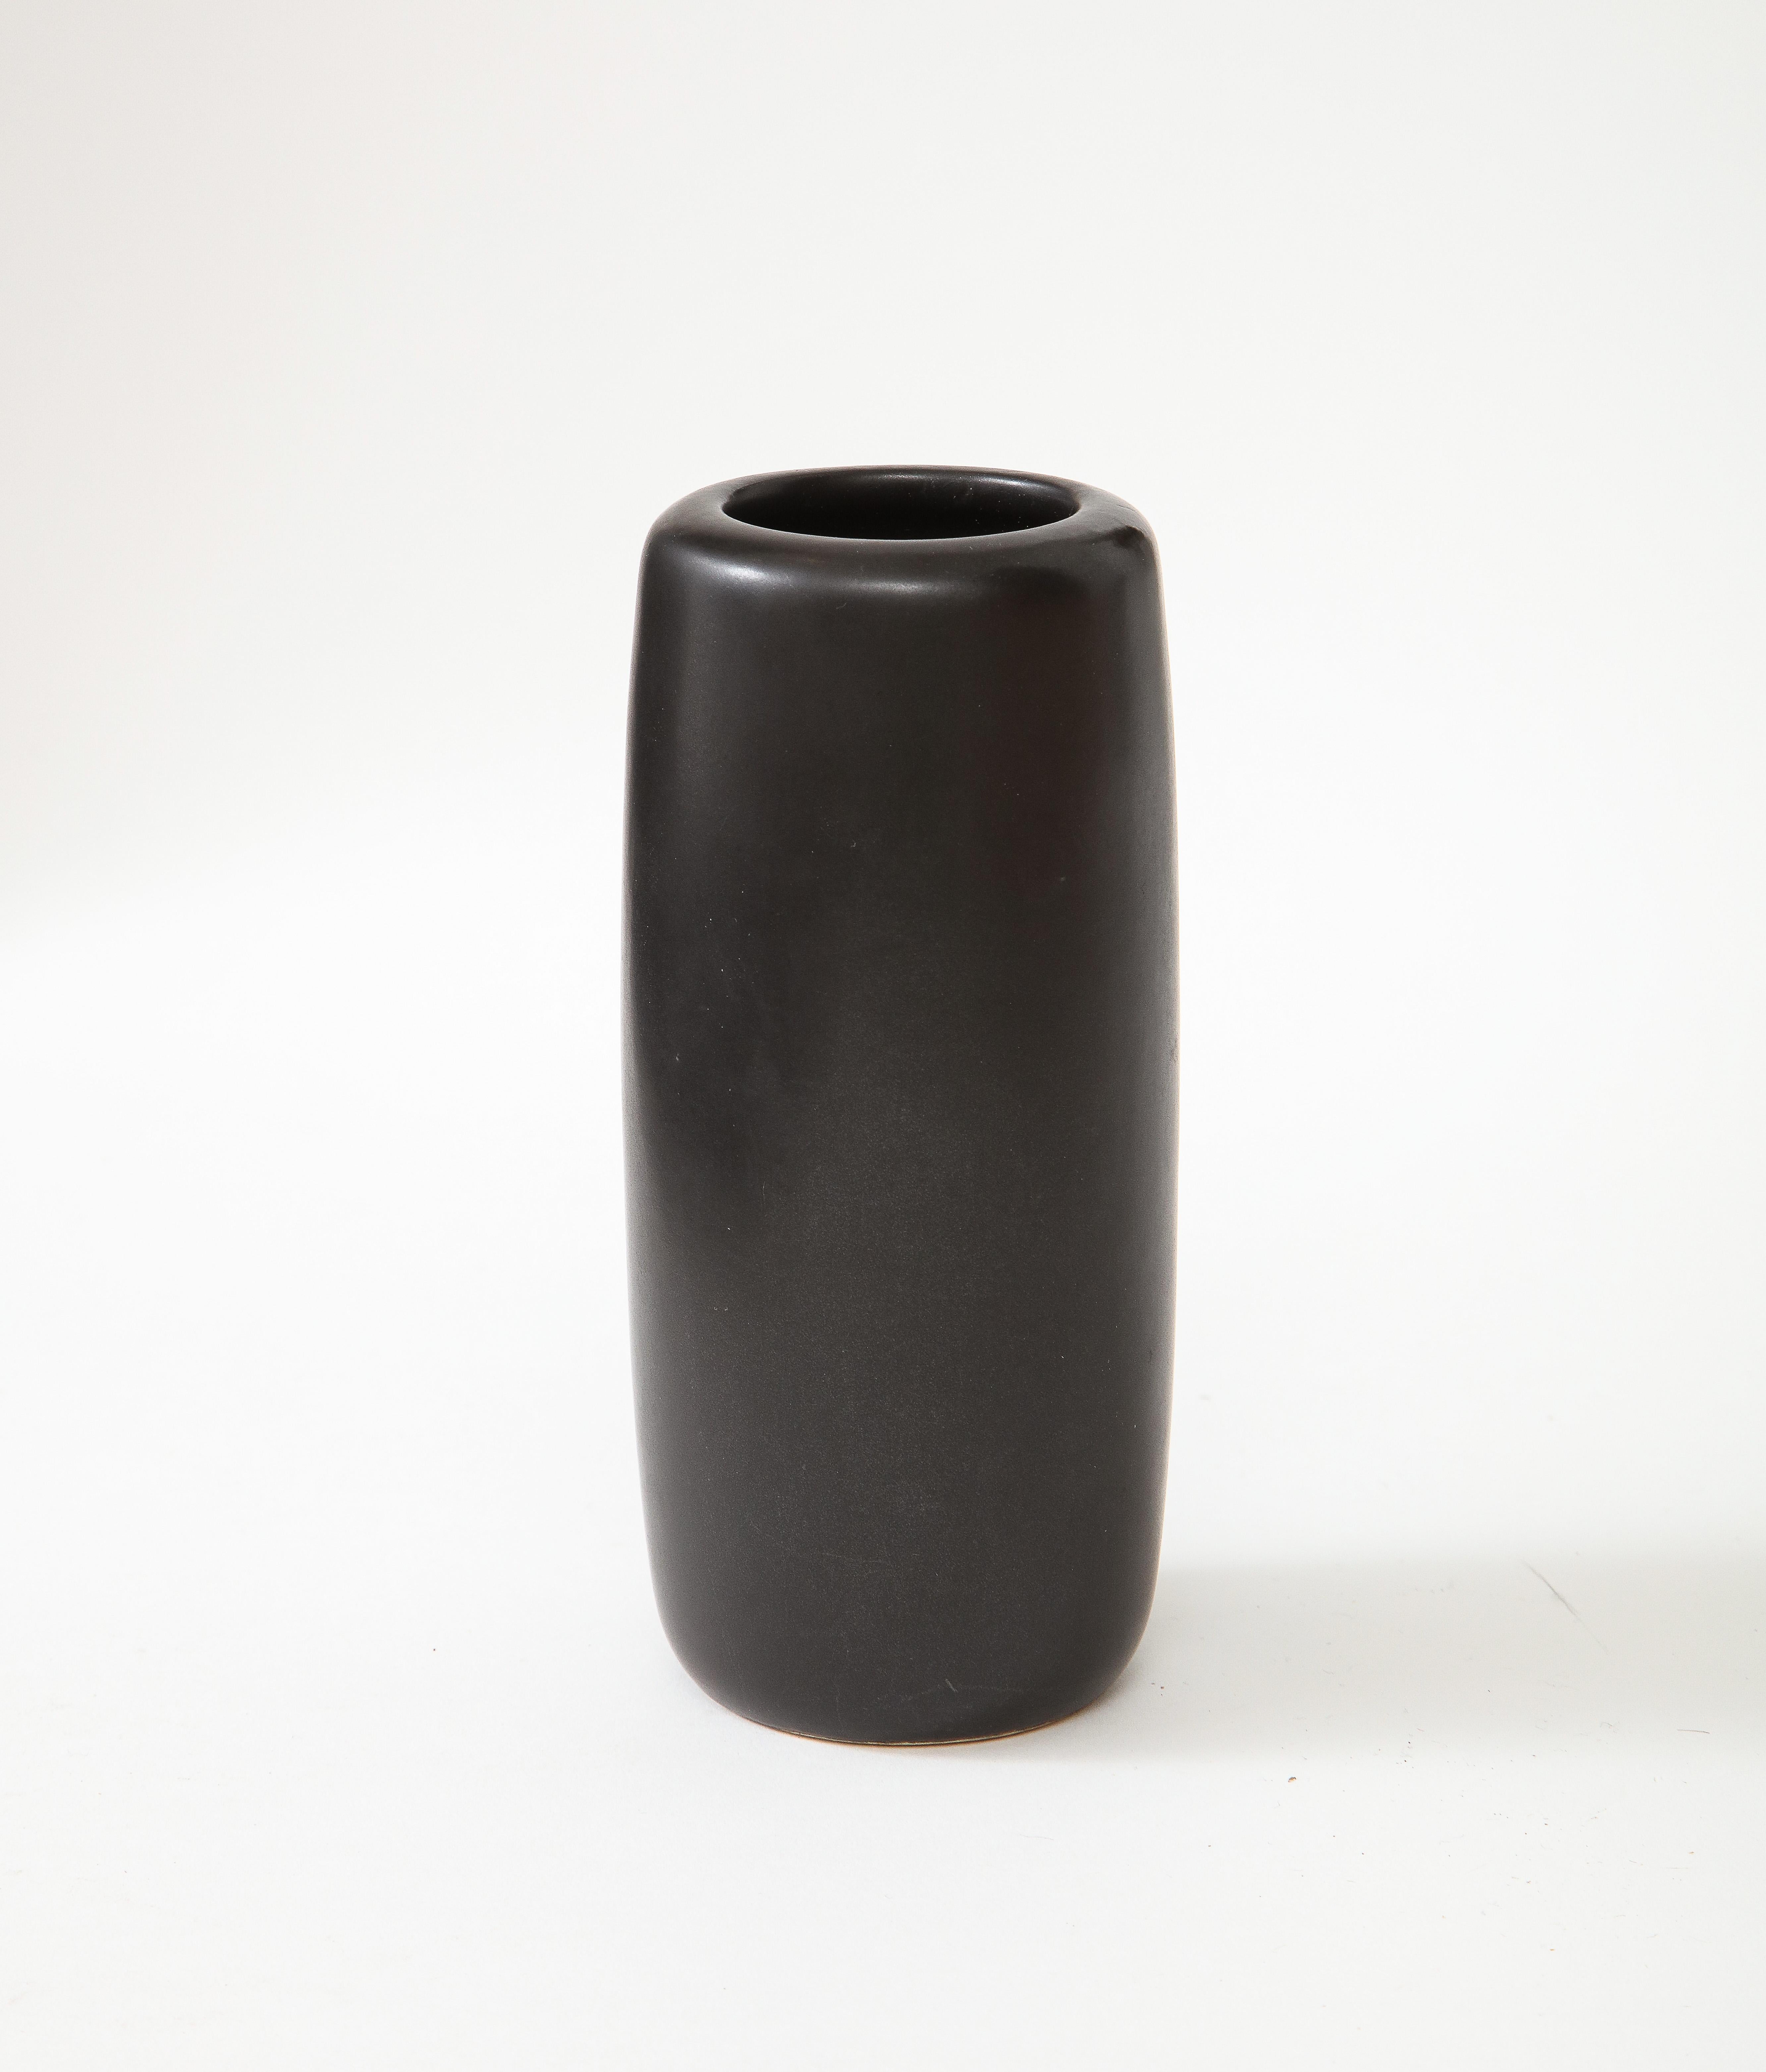 J. B. Matte Black Modern Vase, Signed, c. 1960
Ceramic
H: 6 Diam. 2.75 in.